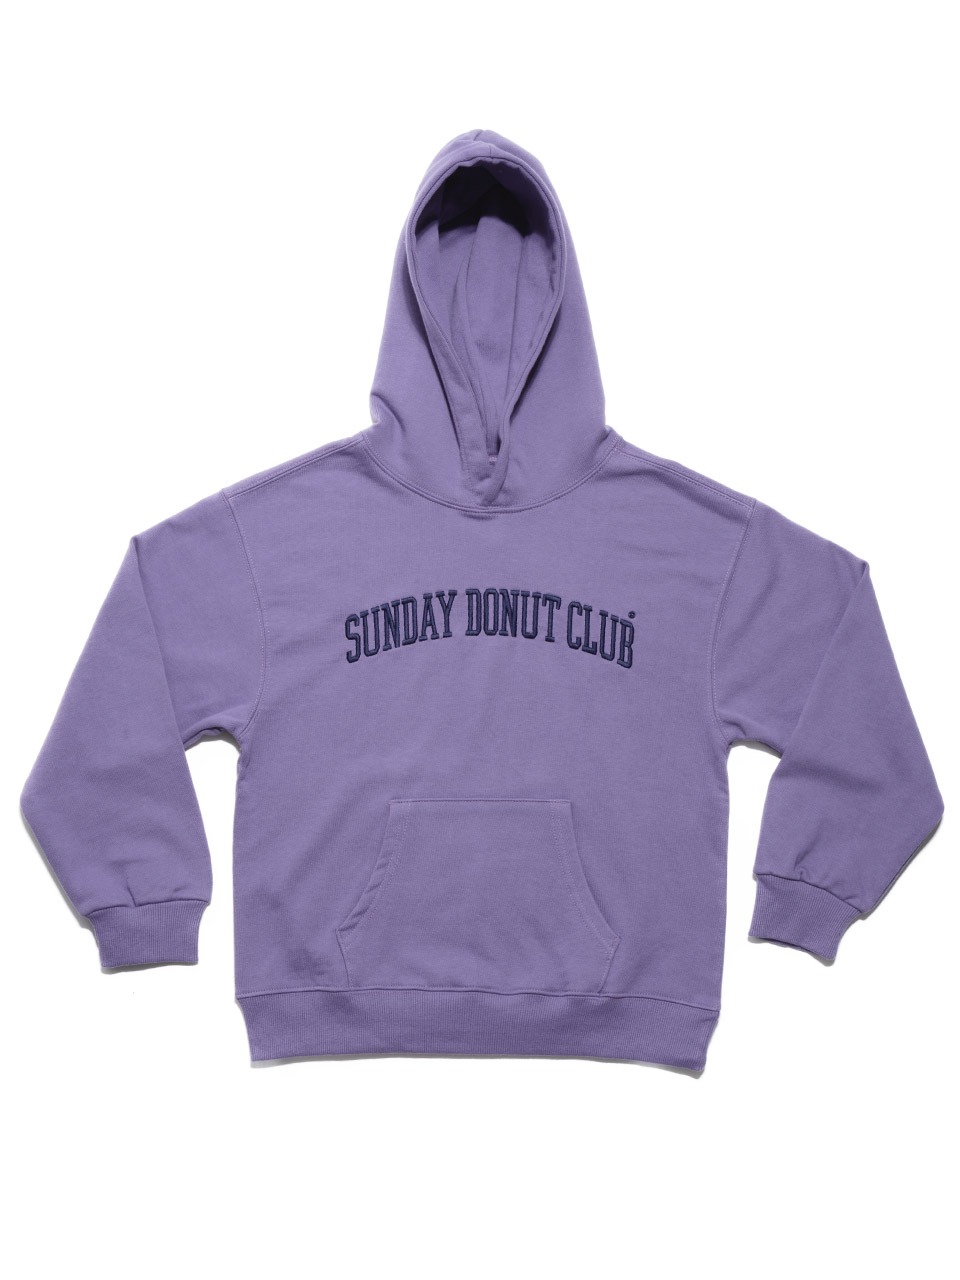 SUNDAY DONUT CLUB HOODIE [Purple]